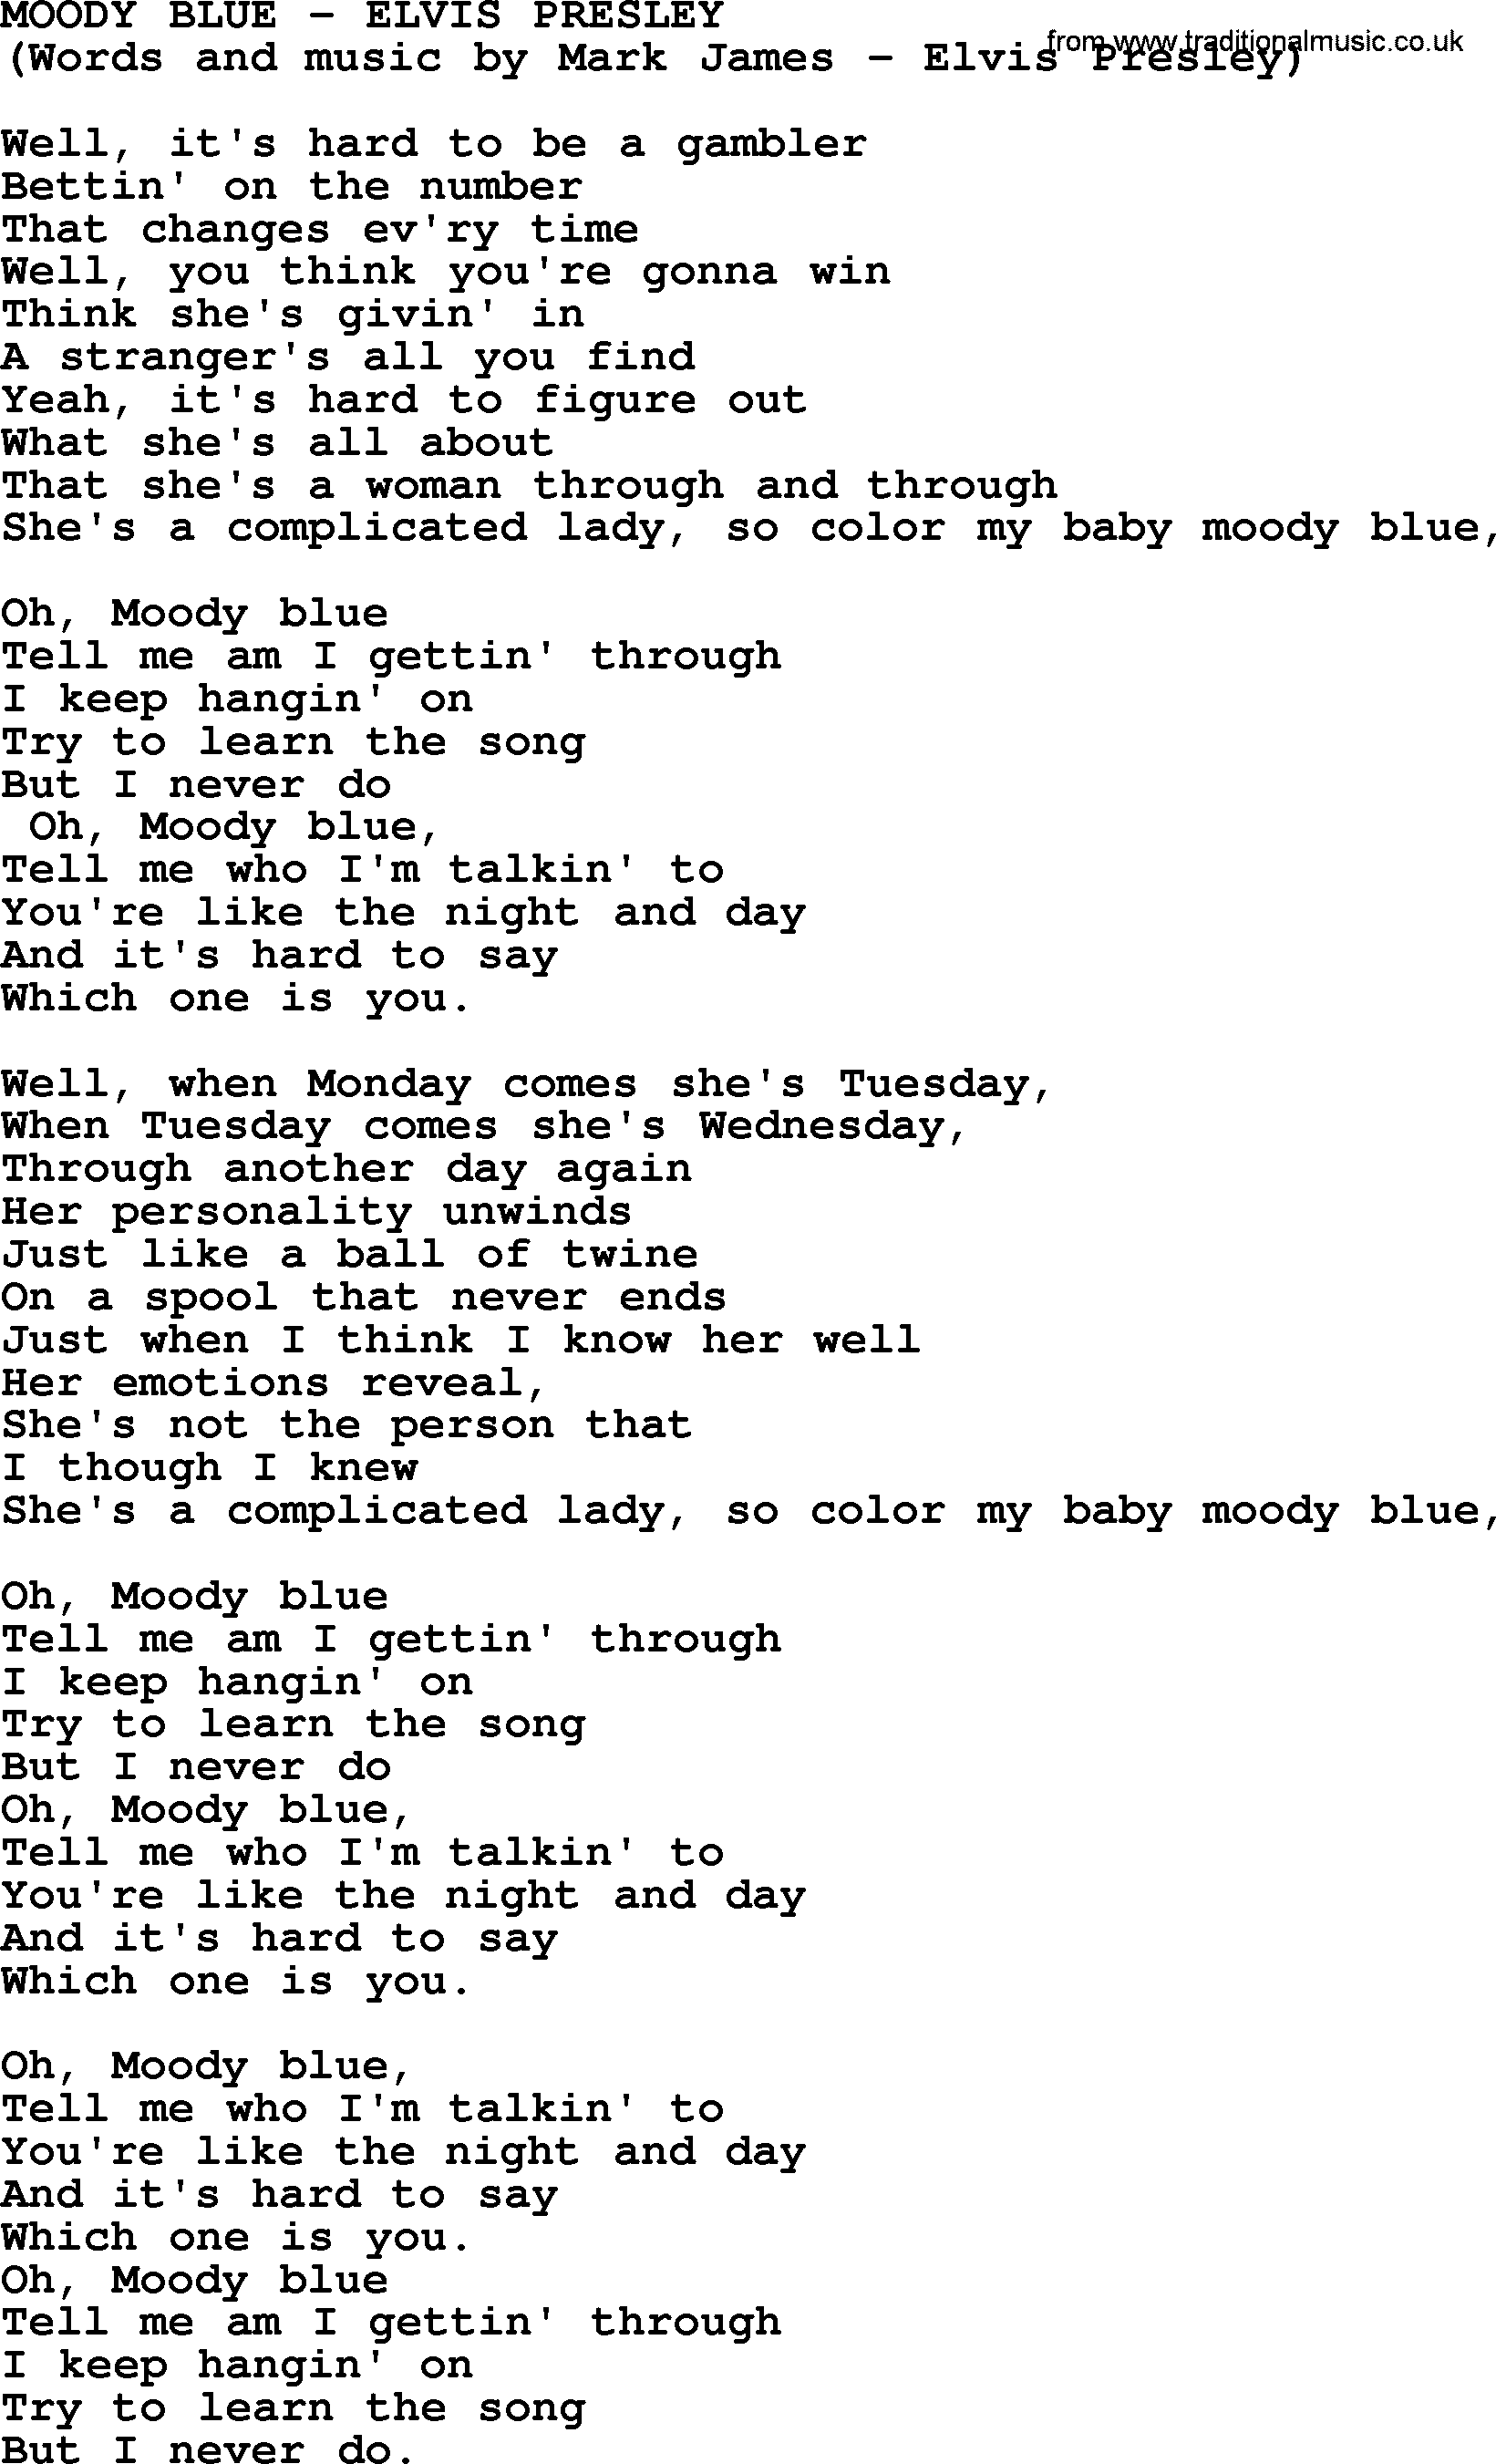 Elvis Presley song: Moody Blue lyrics